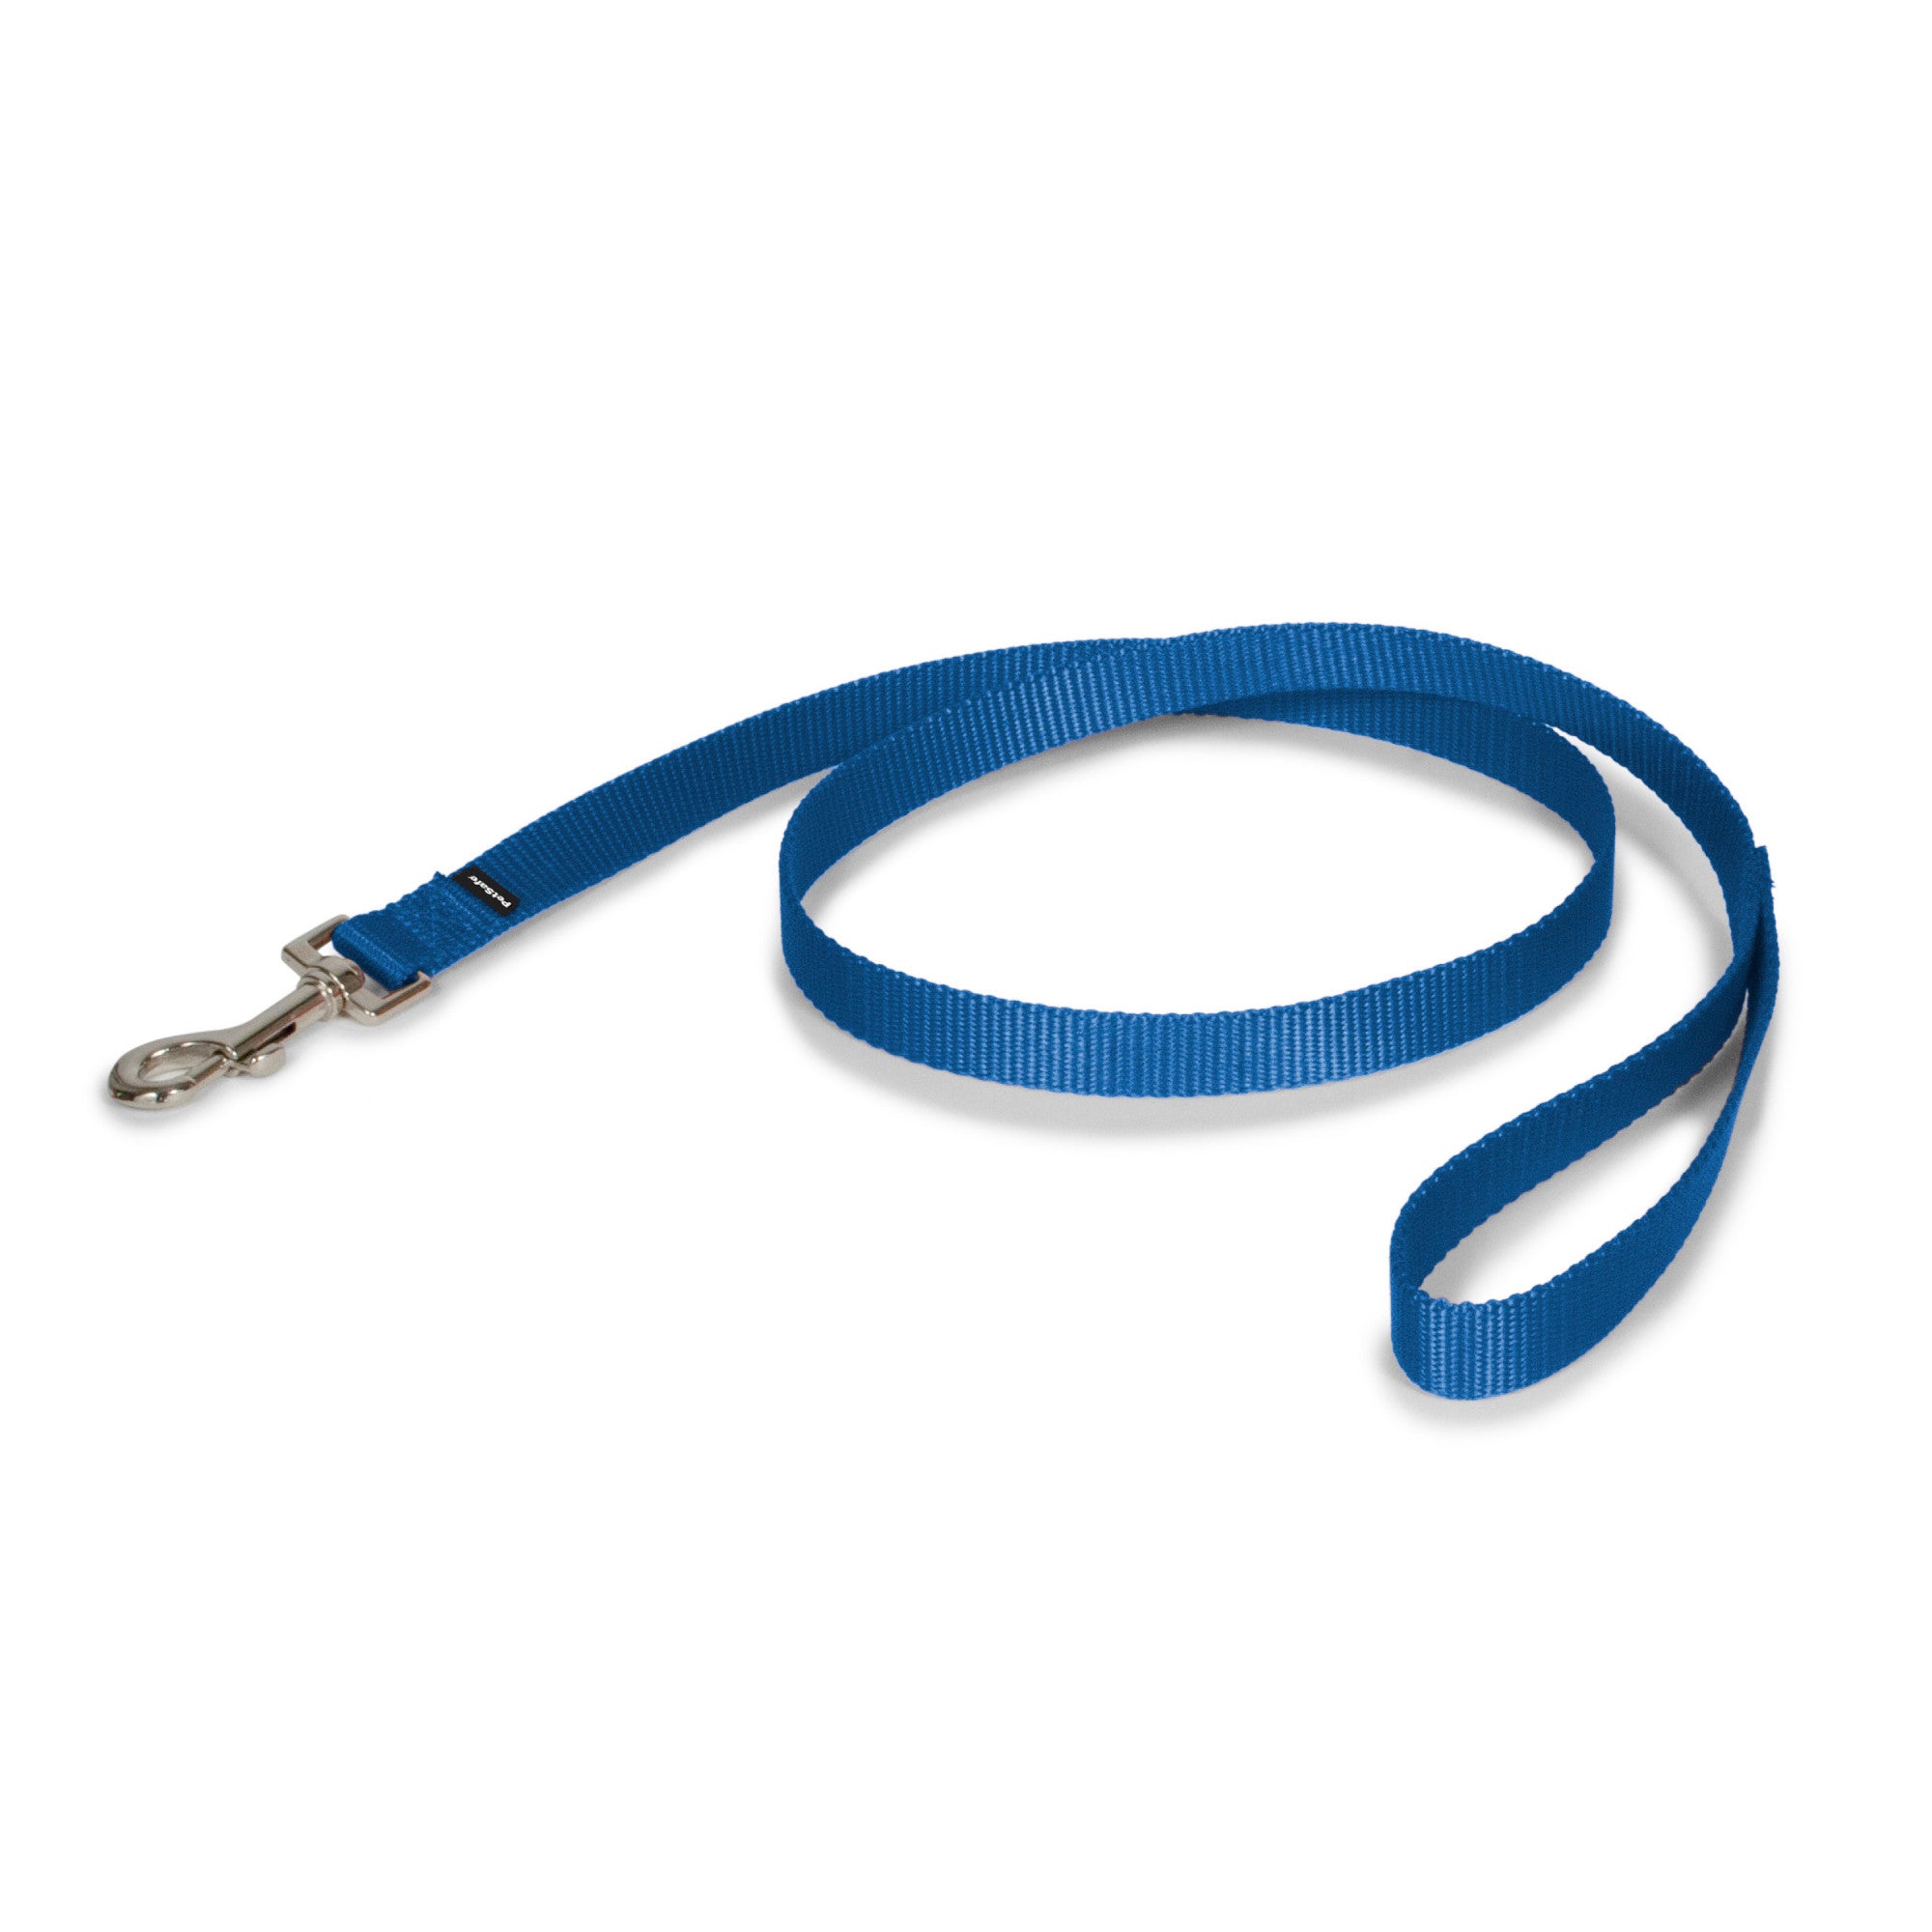 Correa Básica de Nylon color Azul Marino para Perros de Petsafe®